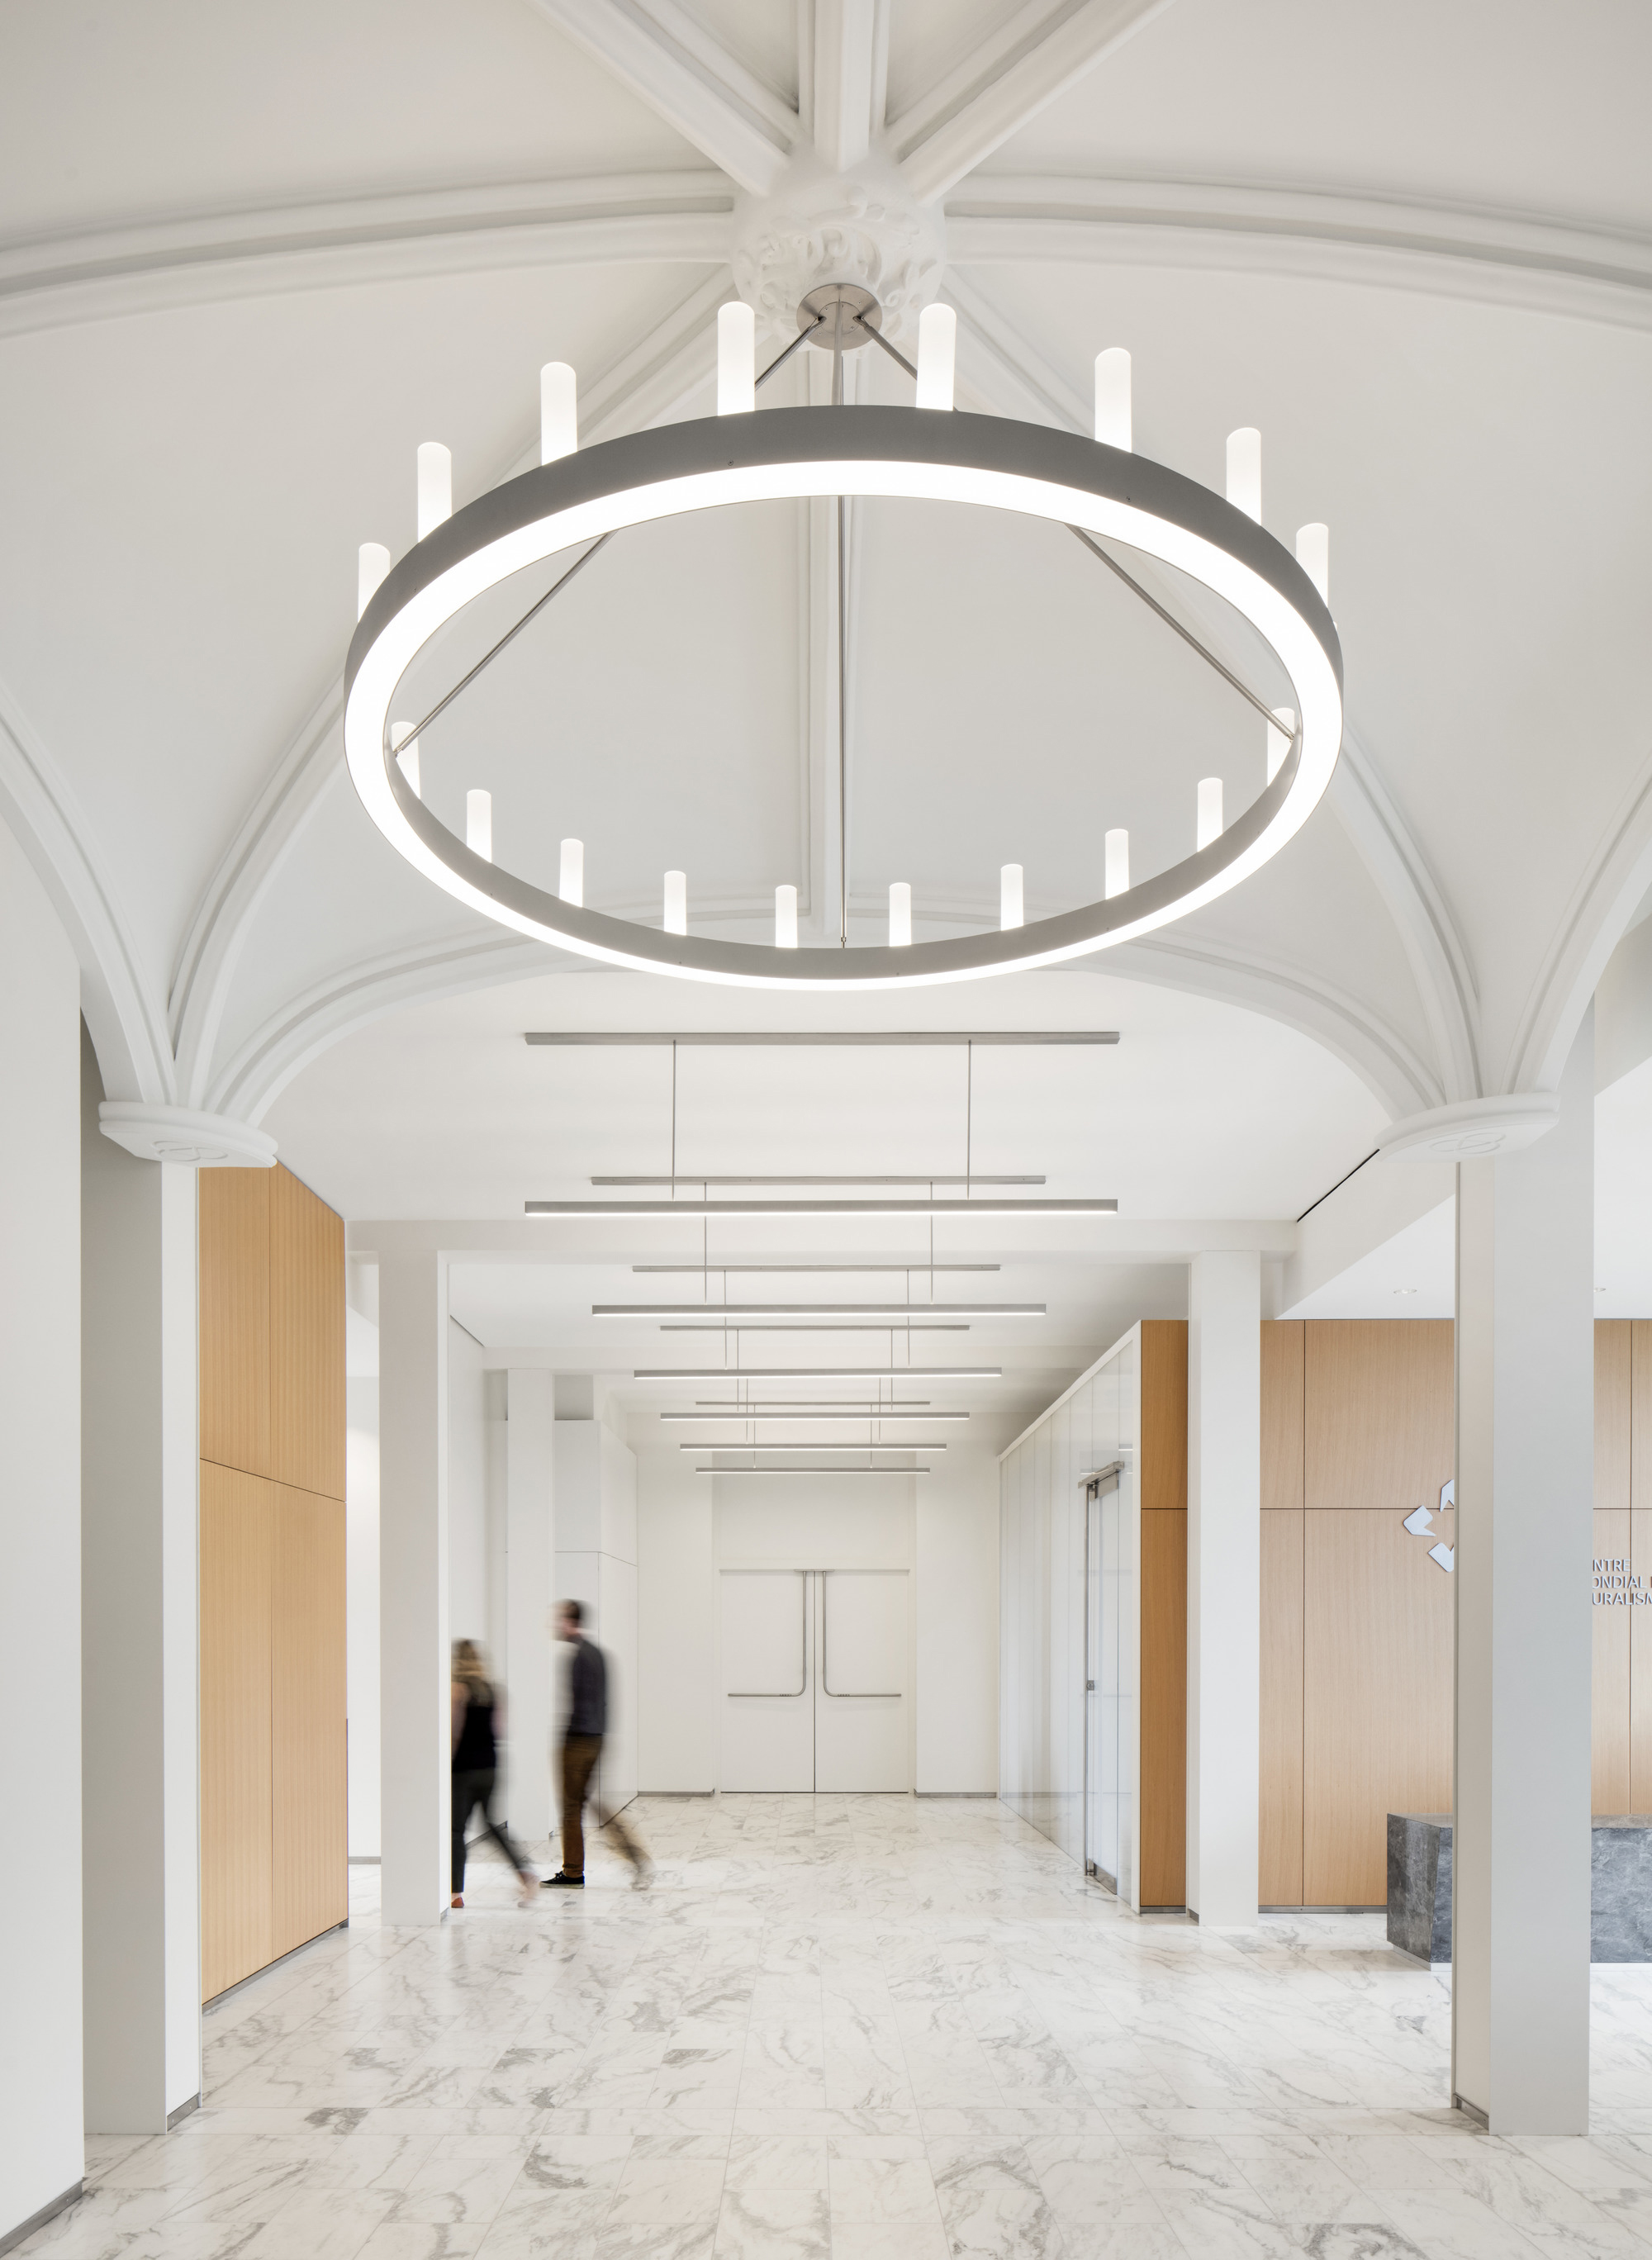 Interior Design Services - Light fixture